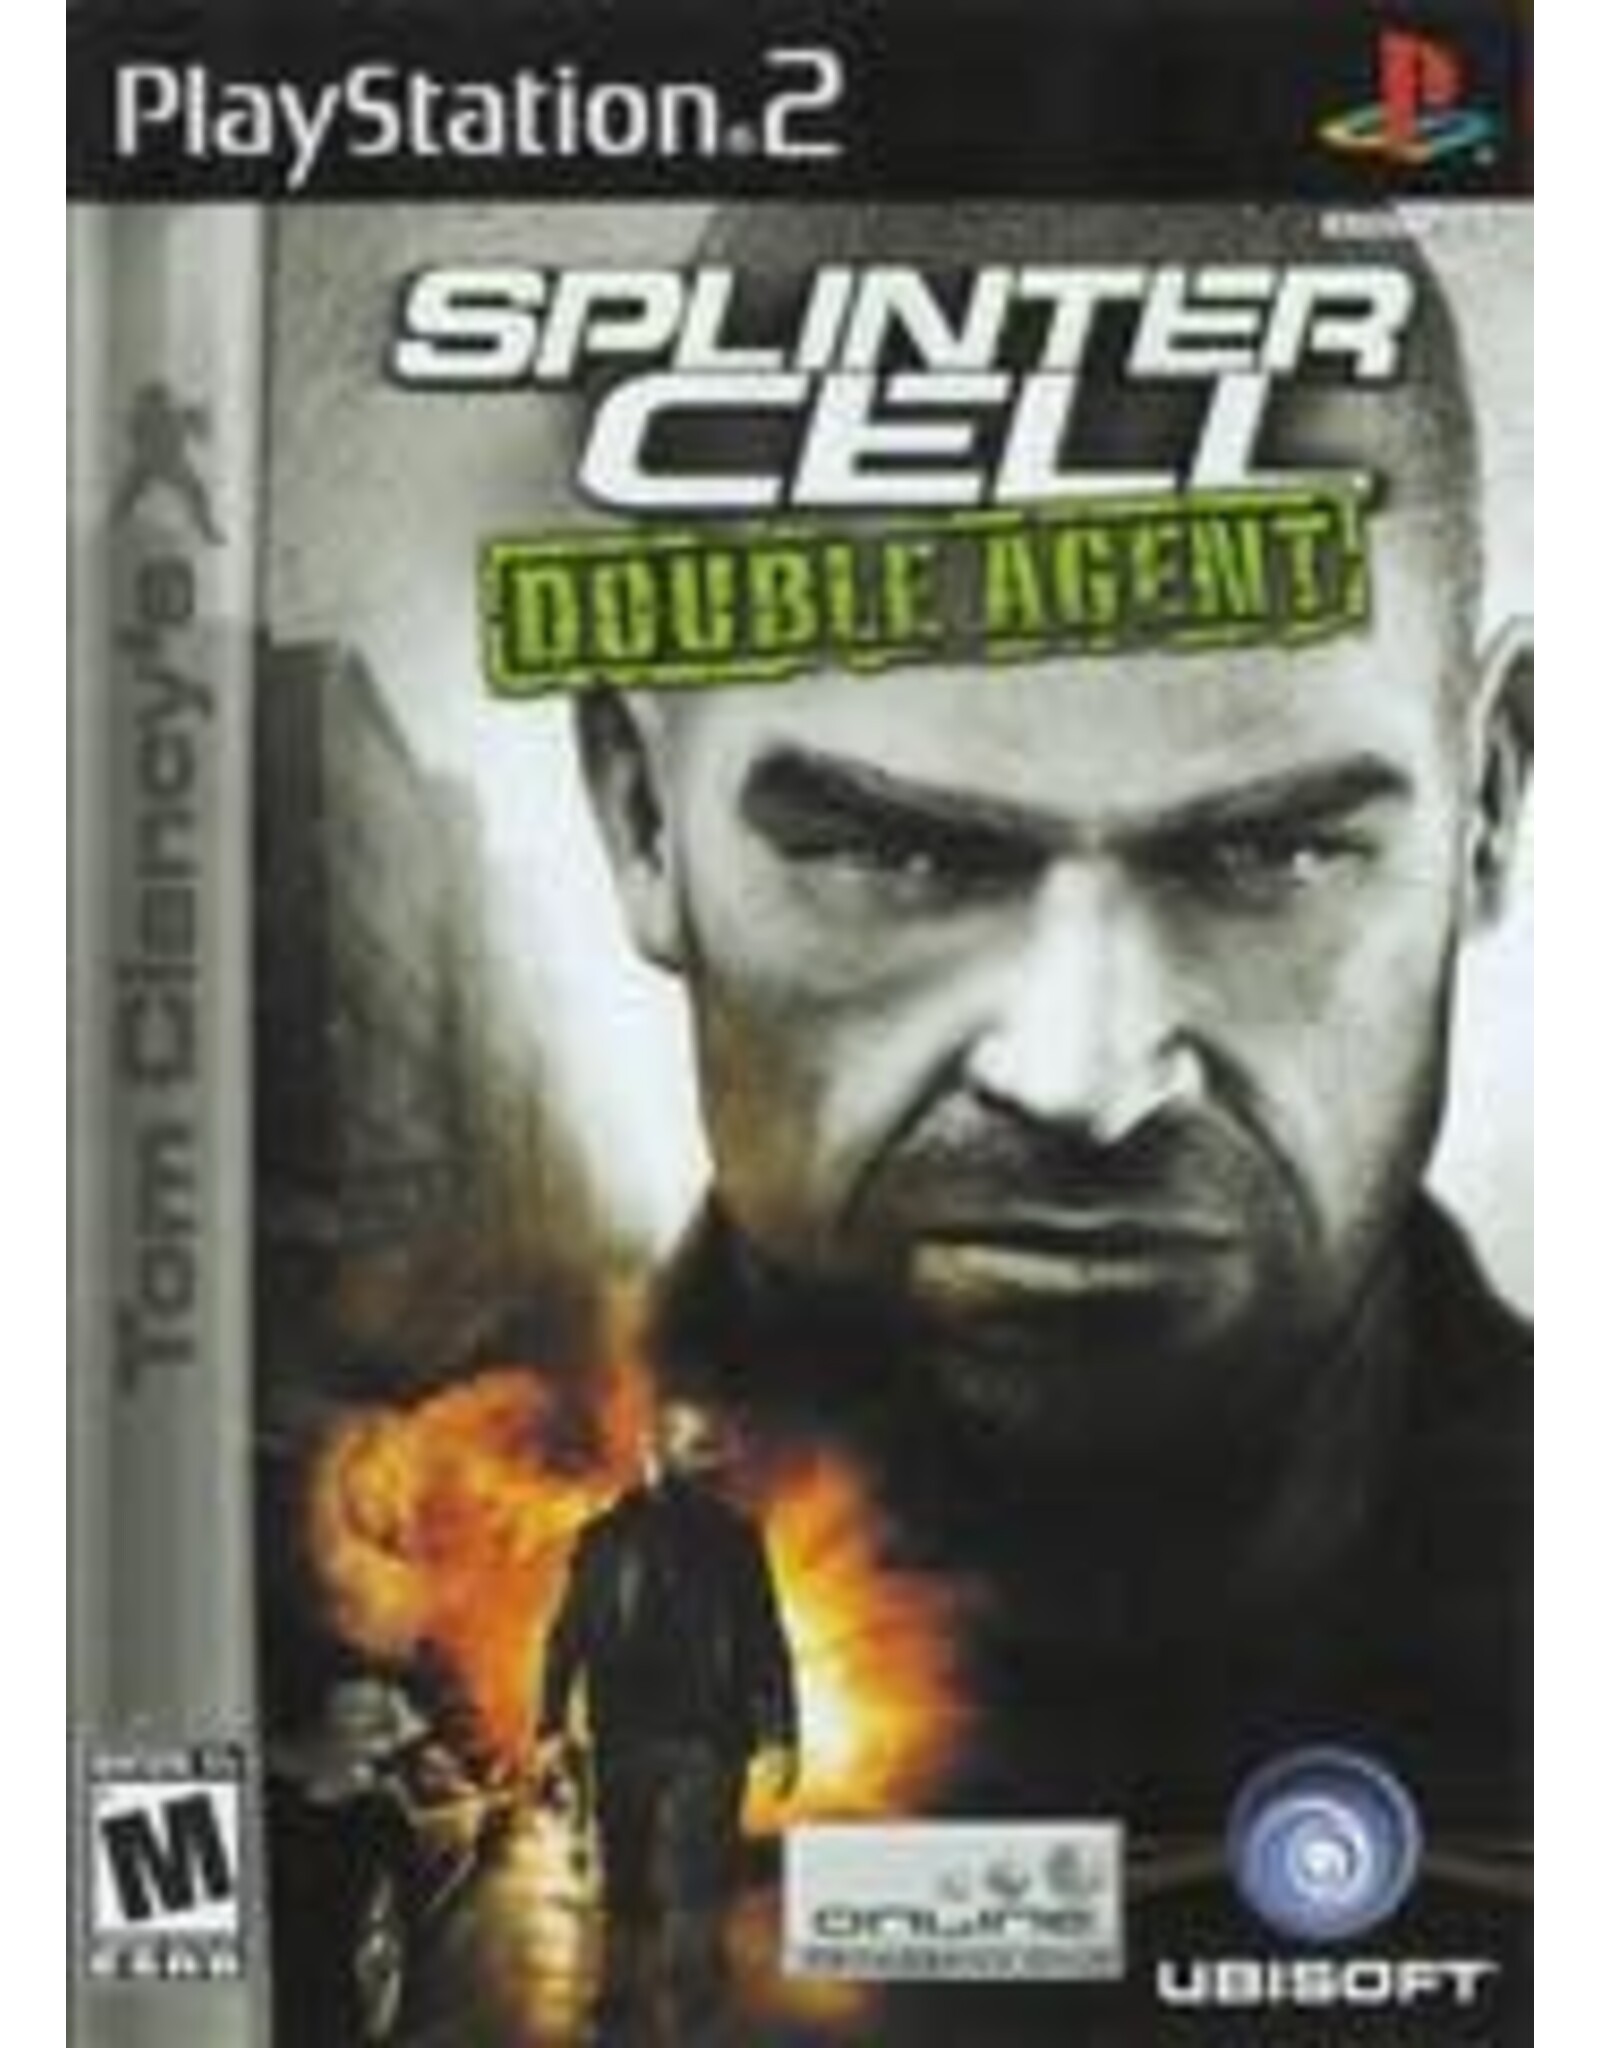 Playstation 2 Splinter Cell Double Agent (CiB, Damaged Sleeve)